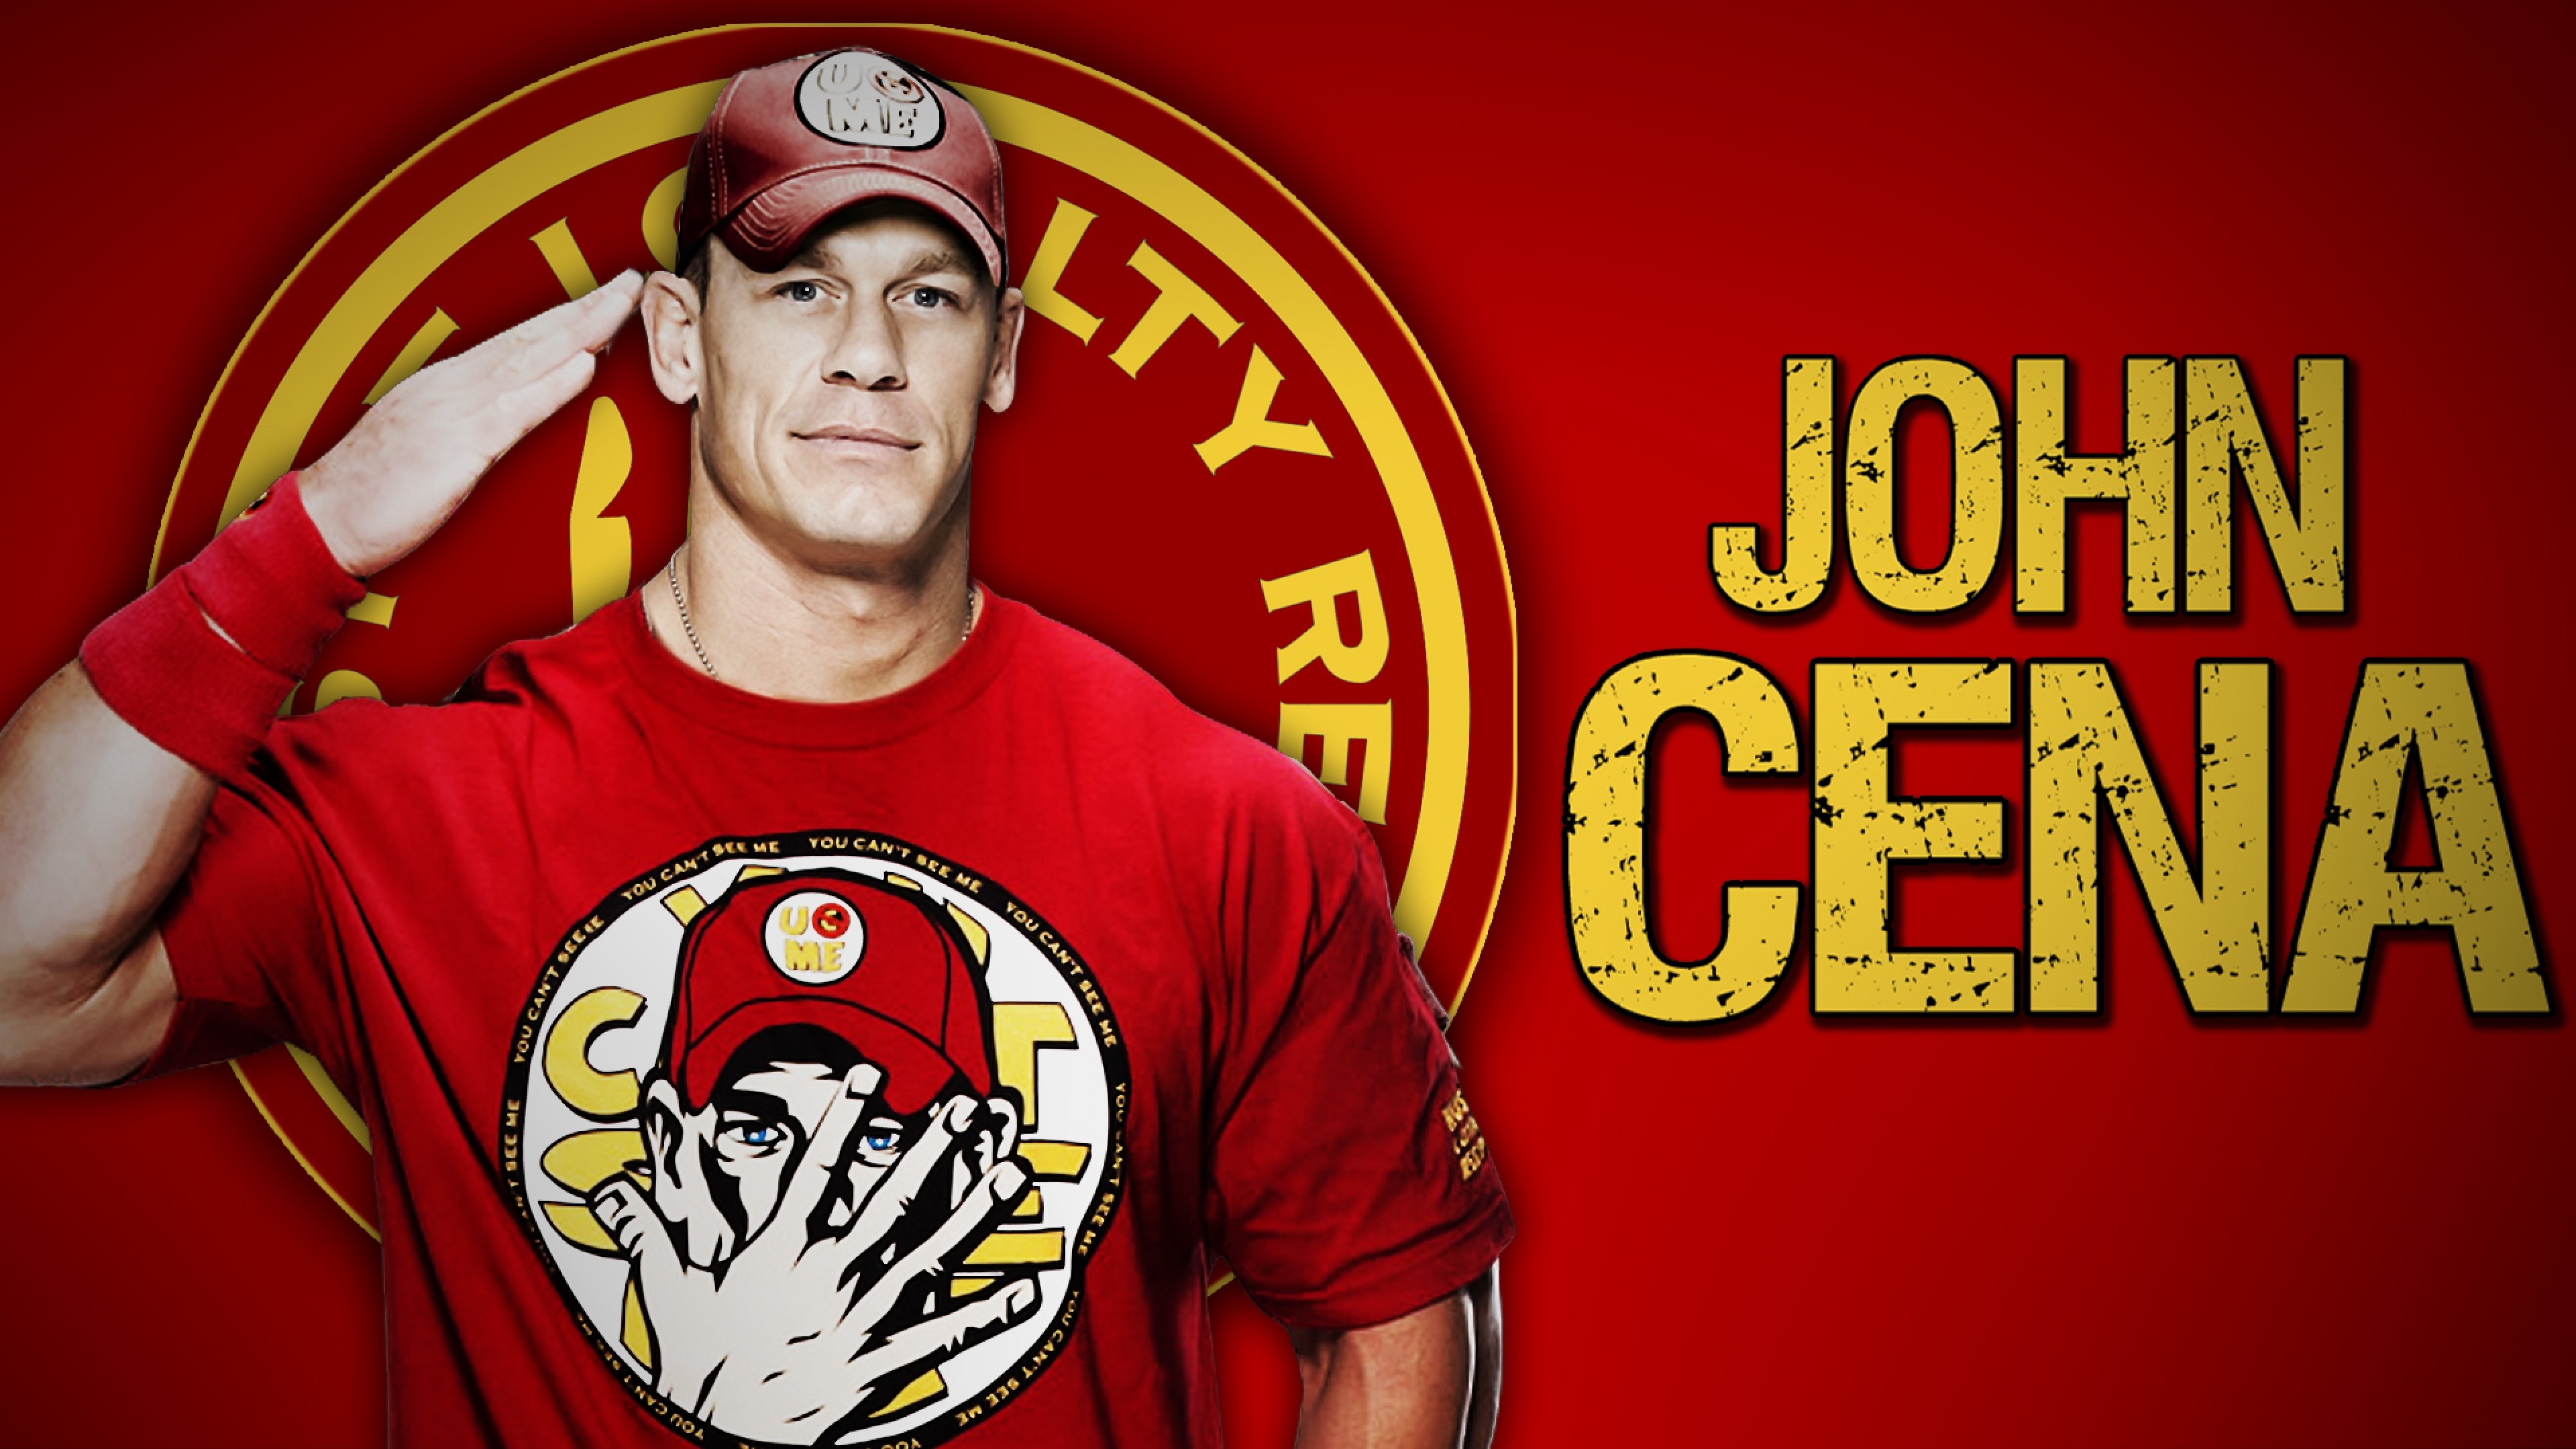 John Cena Red Background Hat Looking At Viewer Smiling Men Red T Shirt T Shirt 3840x2160